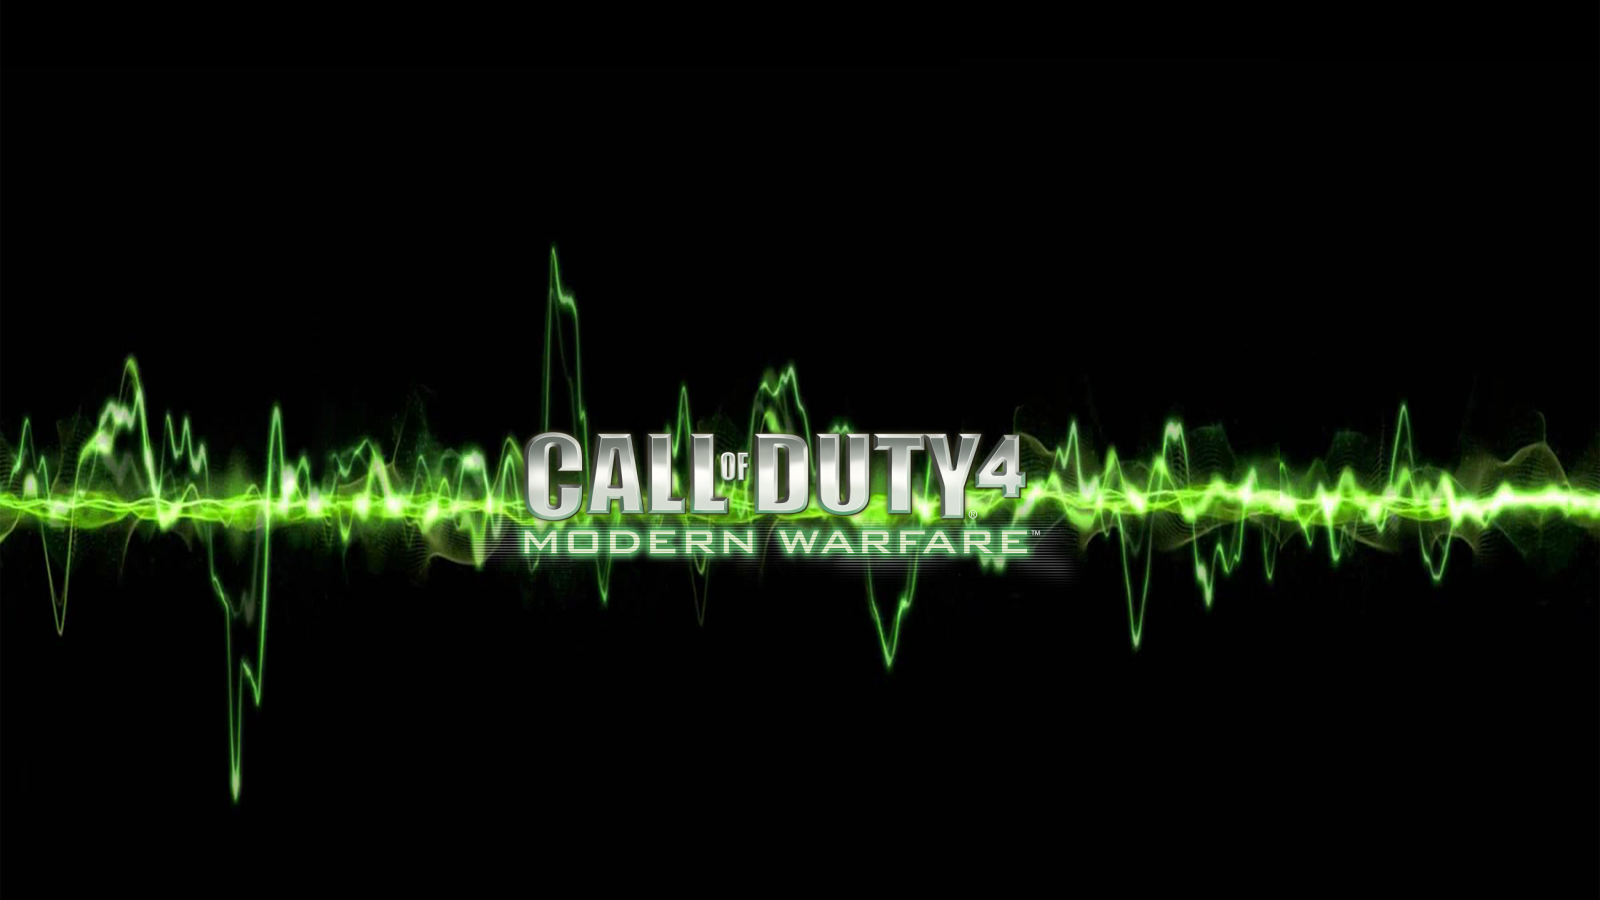 HD Call Of Duty Modern Warfare Wallpaper And Photos